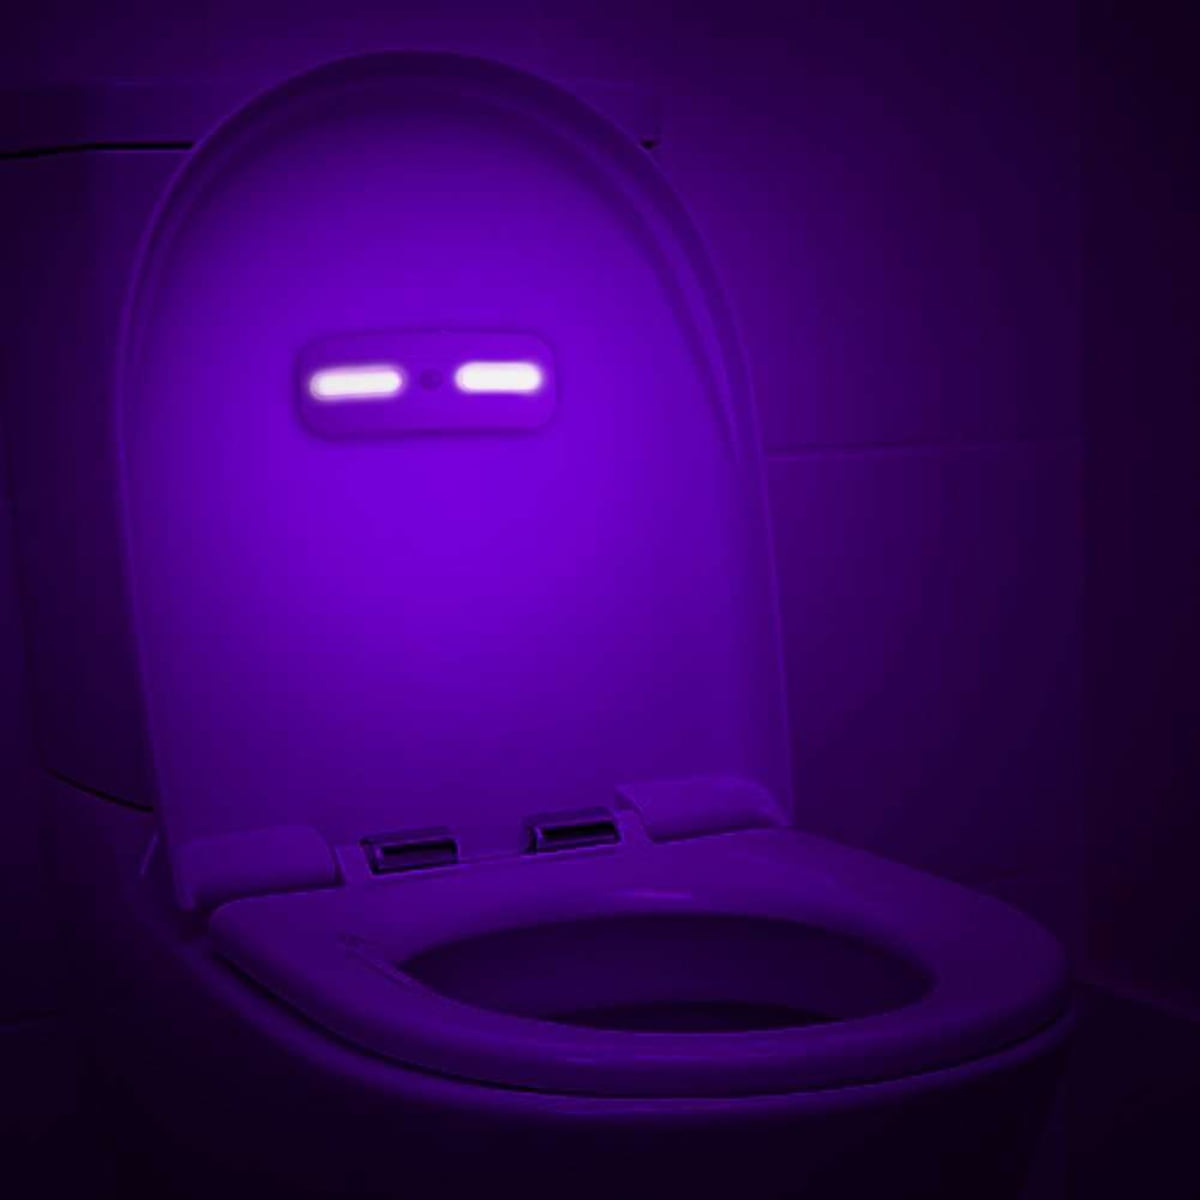 Shining UV light into the toilet : r/mildlyinteresting